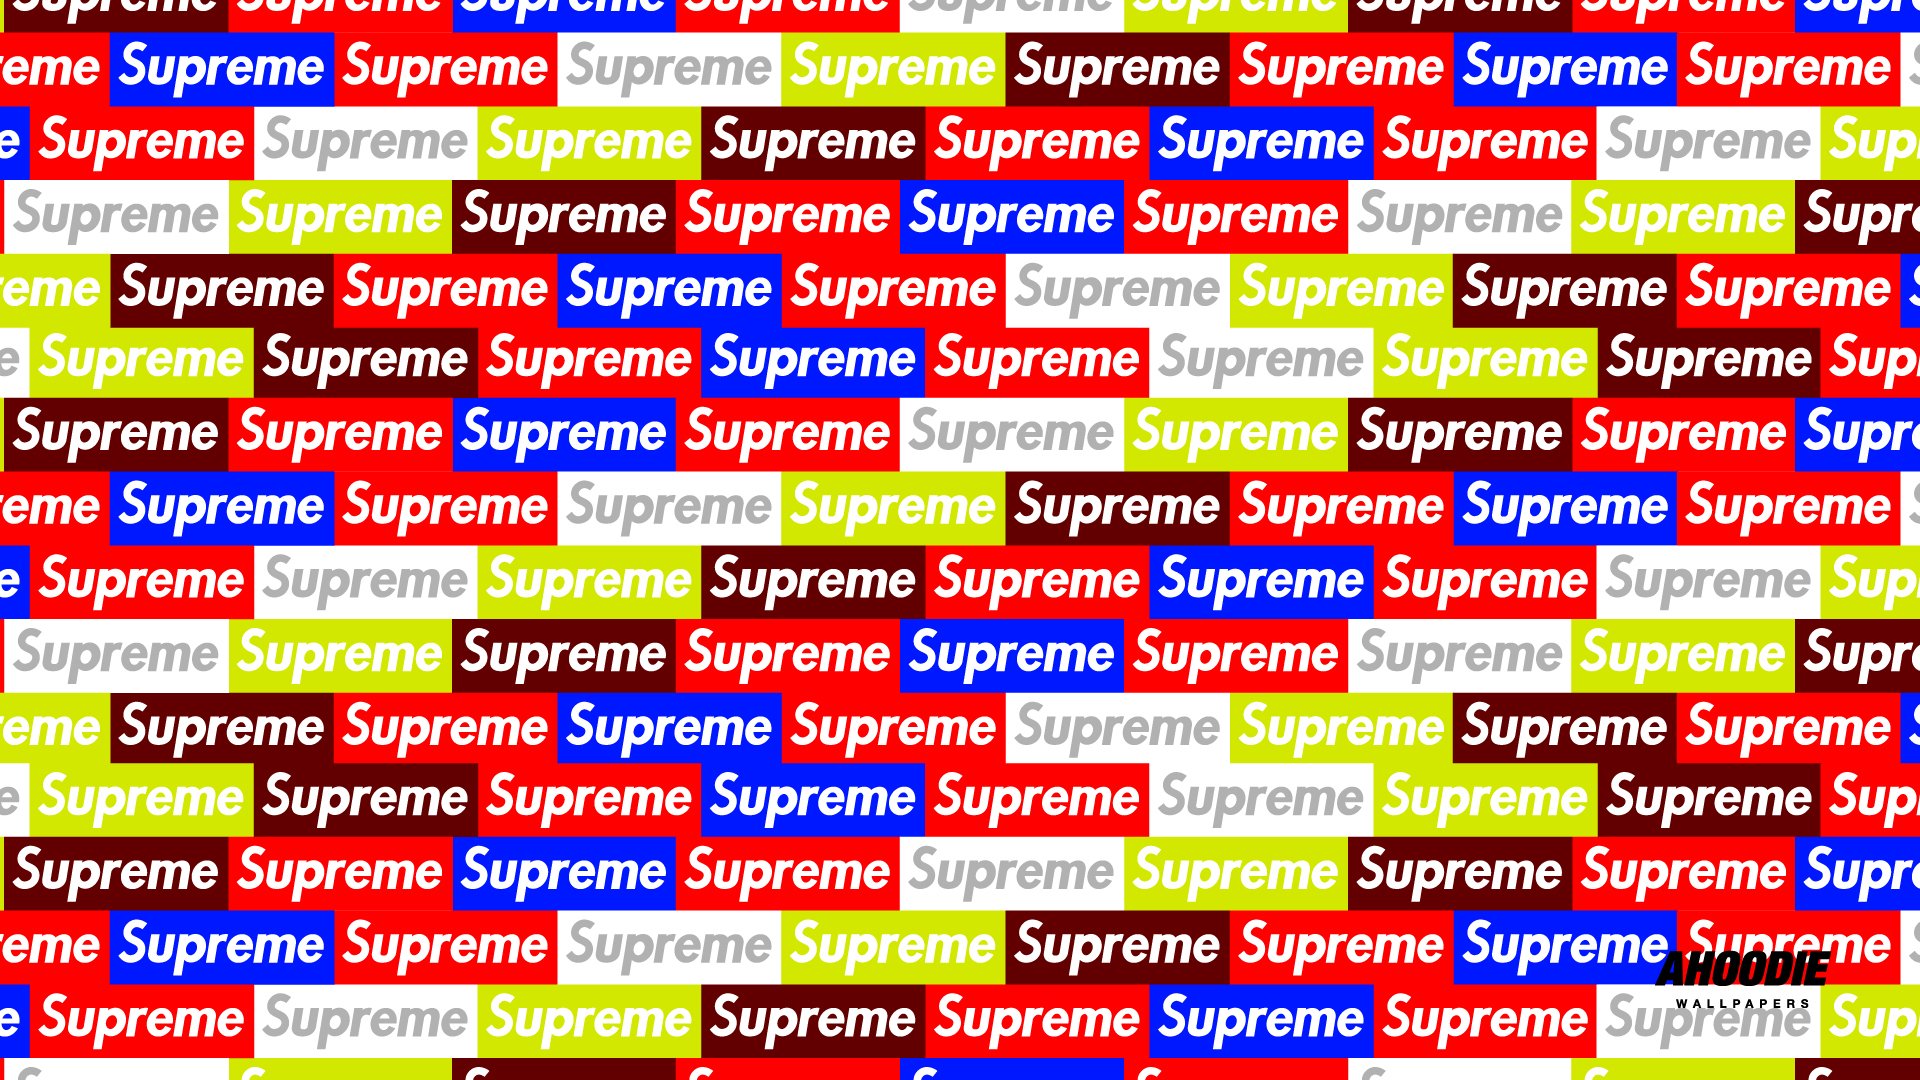 15 Supreme phone wallpapers #Aesthetic #Supreme